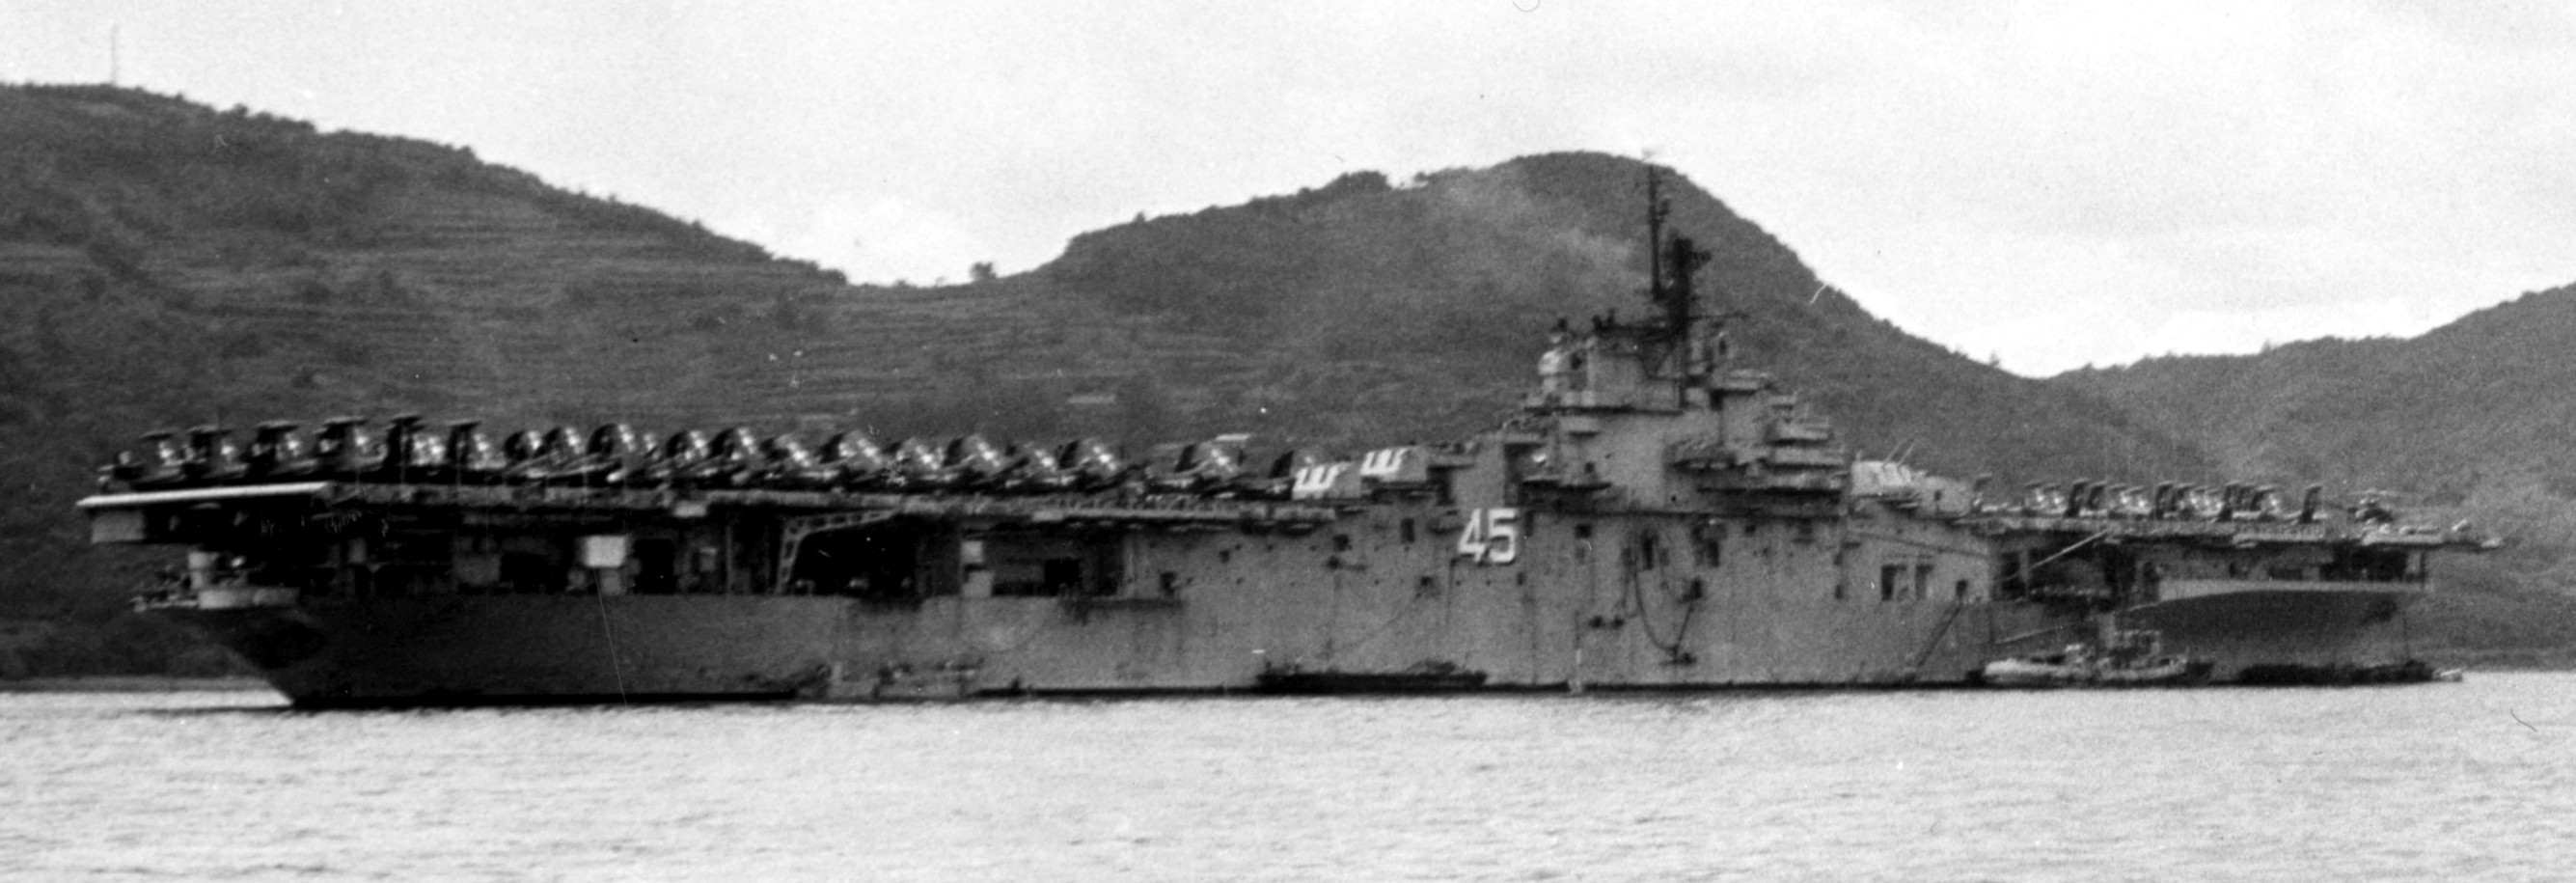 cv-45 uss valley forge essex class aircraft carrier us navy 04